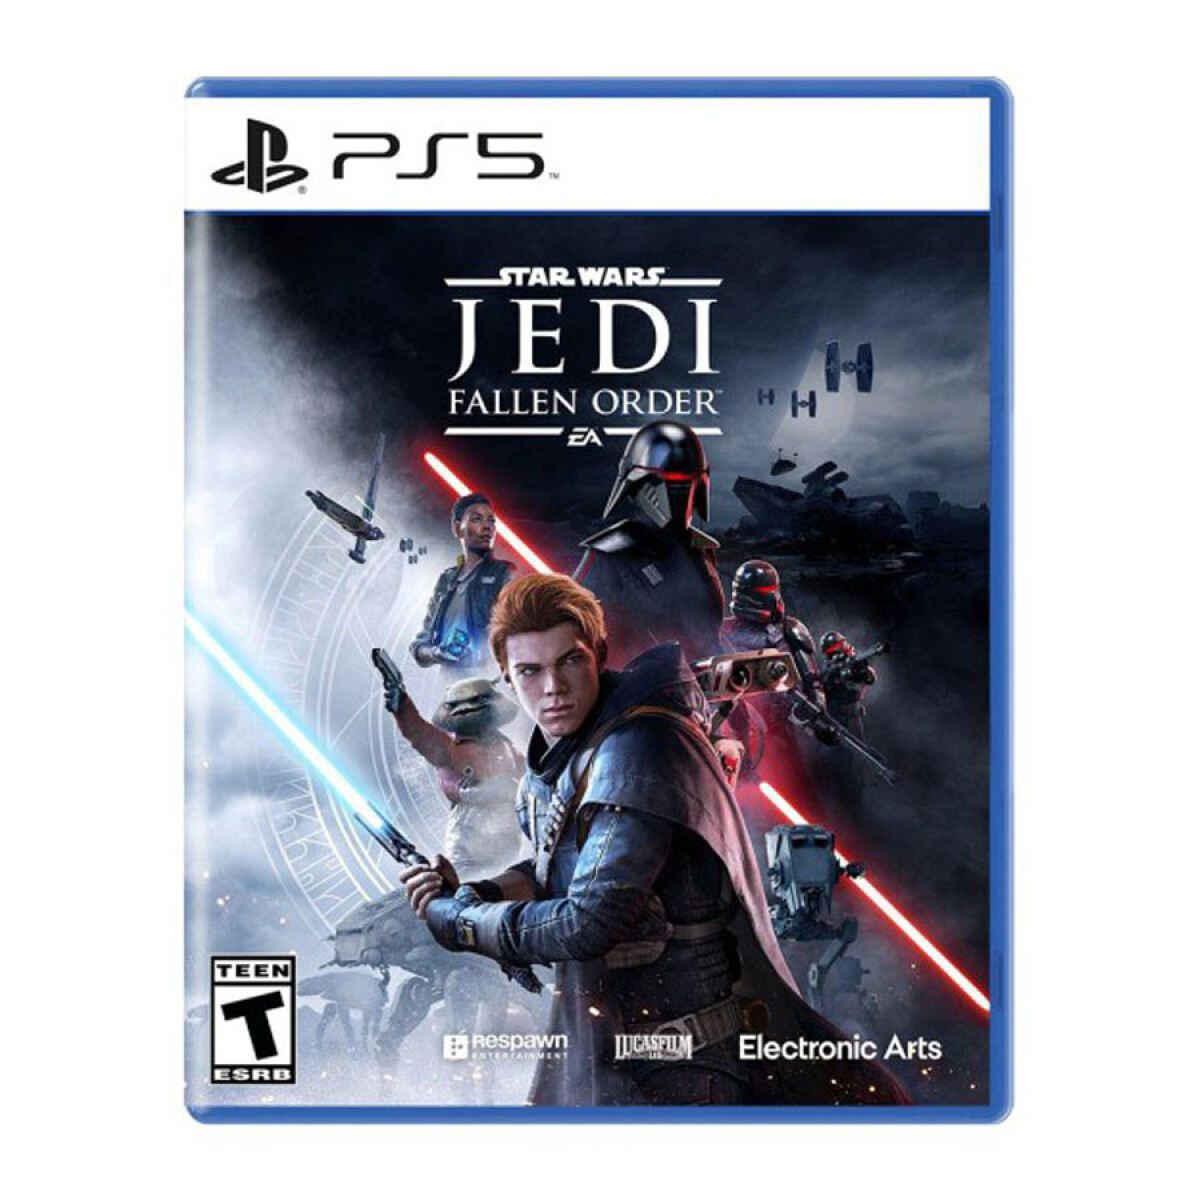 Star Wars - Jedi: Fallen Order PS5 